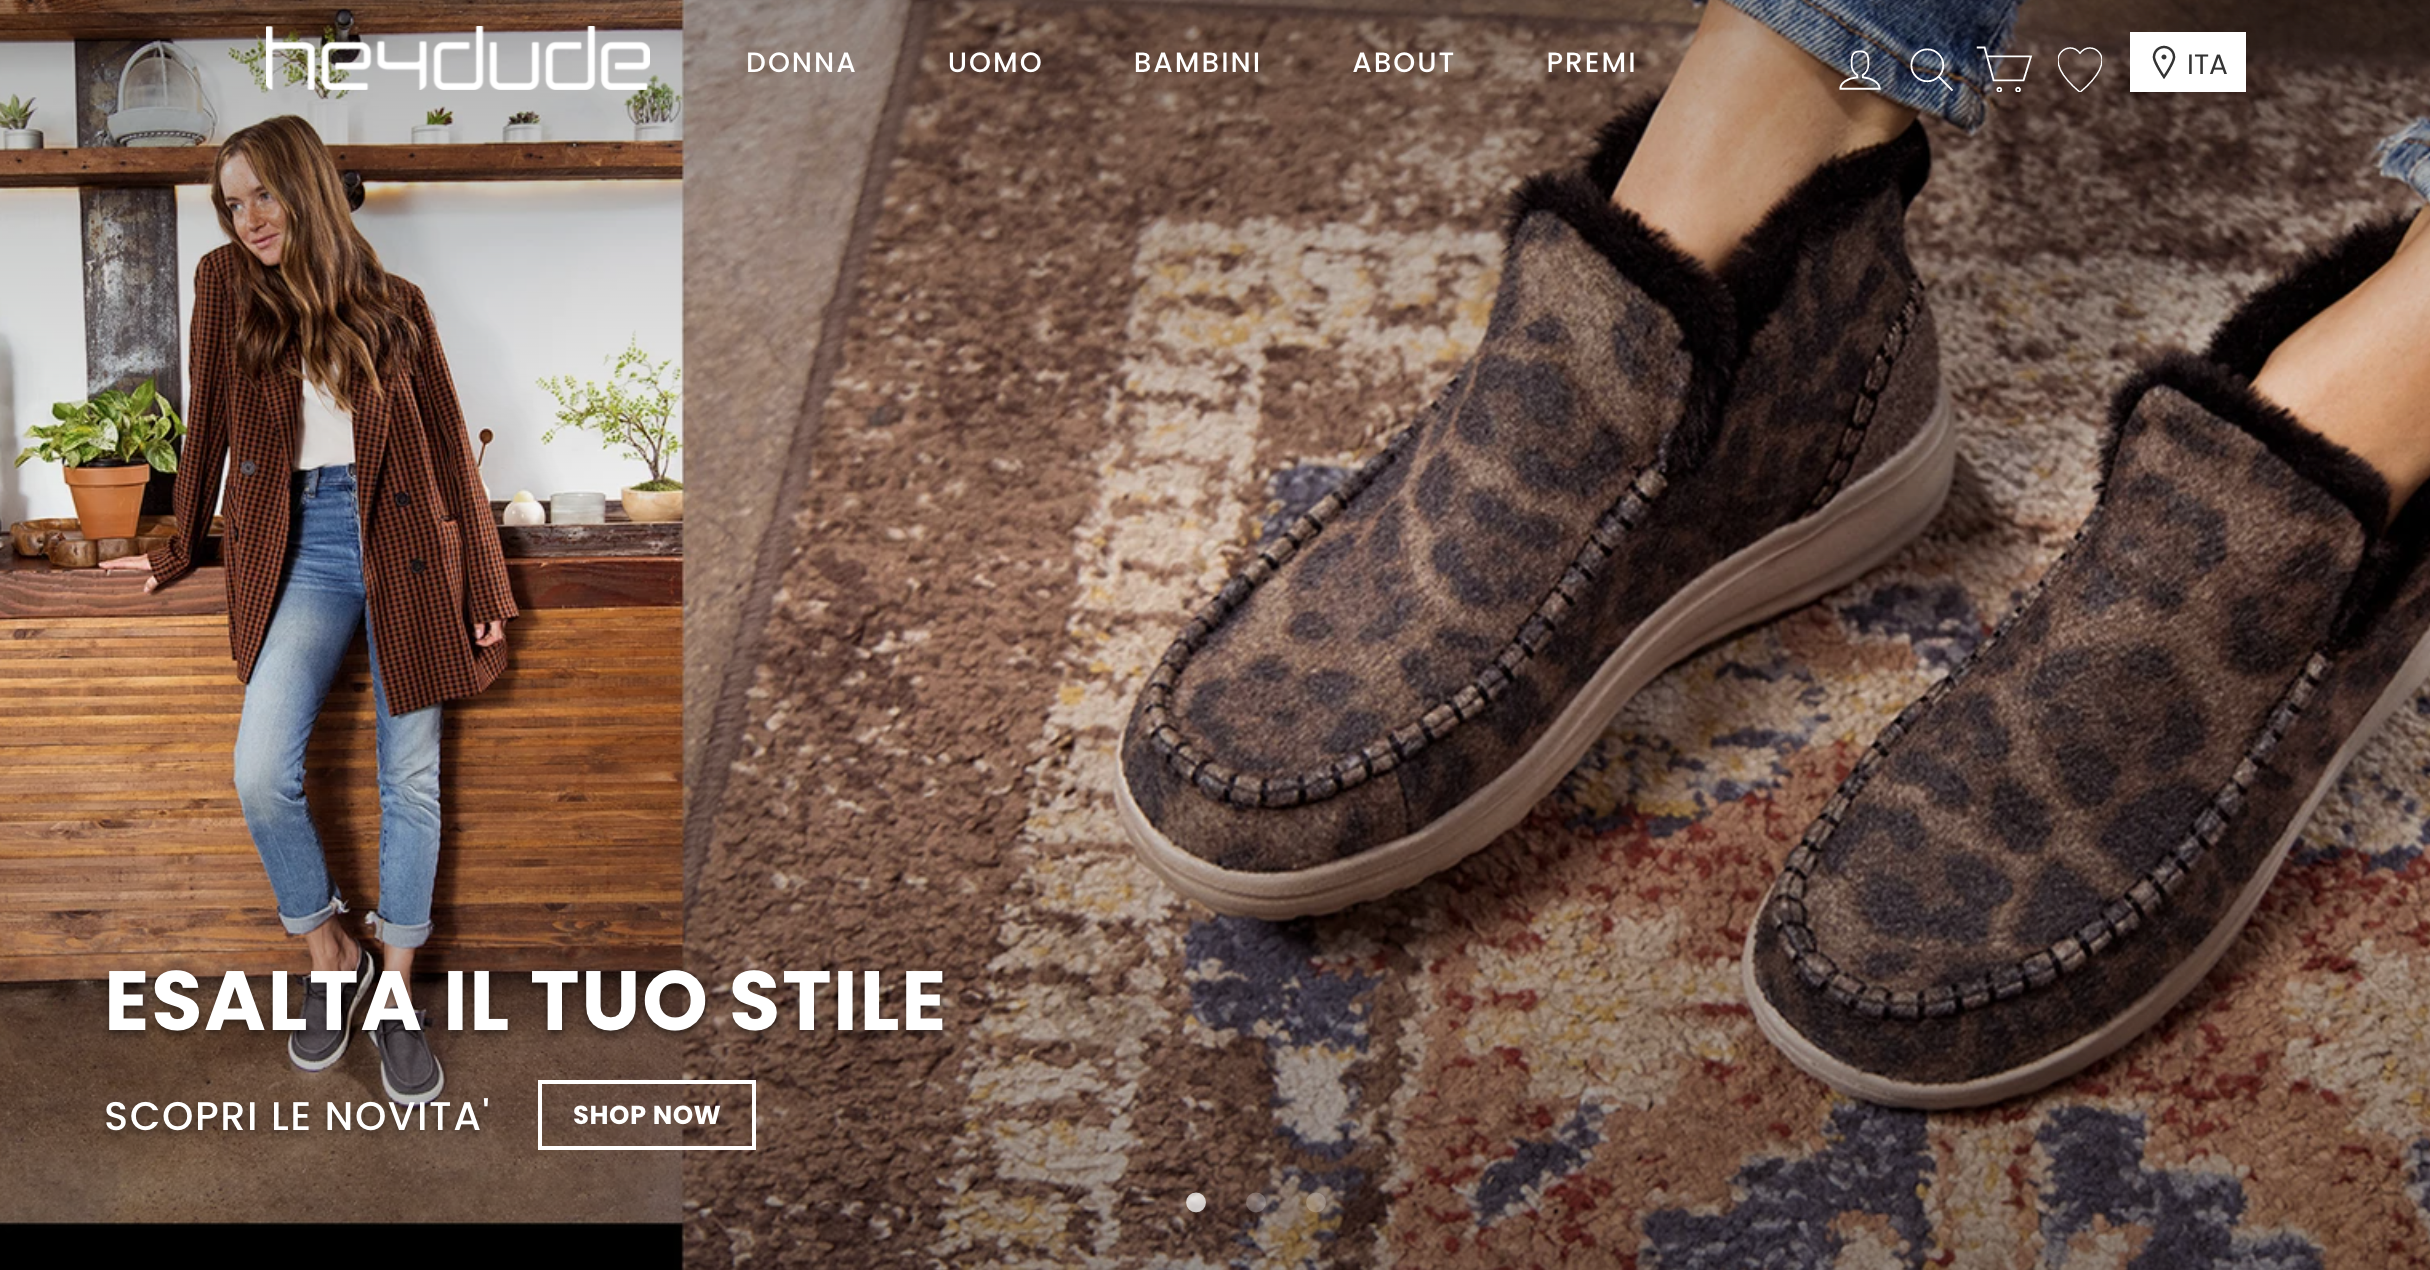 Crocs 将以25亿美元收购意大利休闲鞋品牌 Heydude